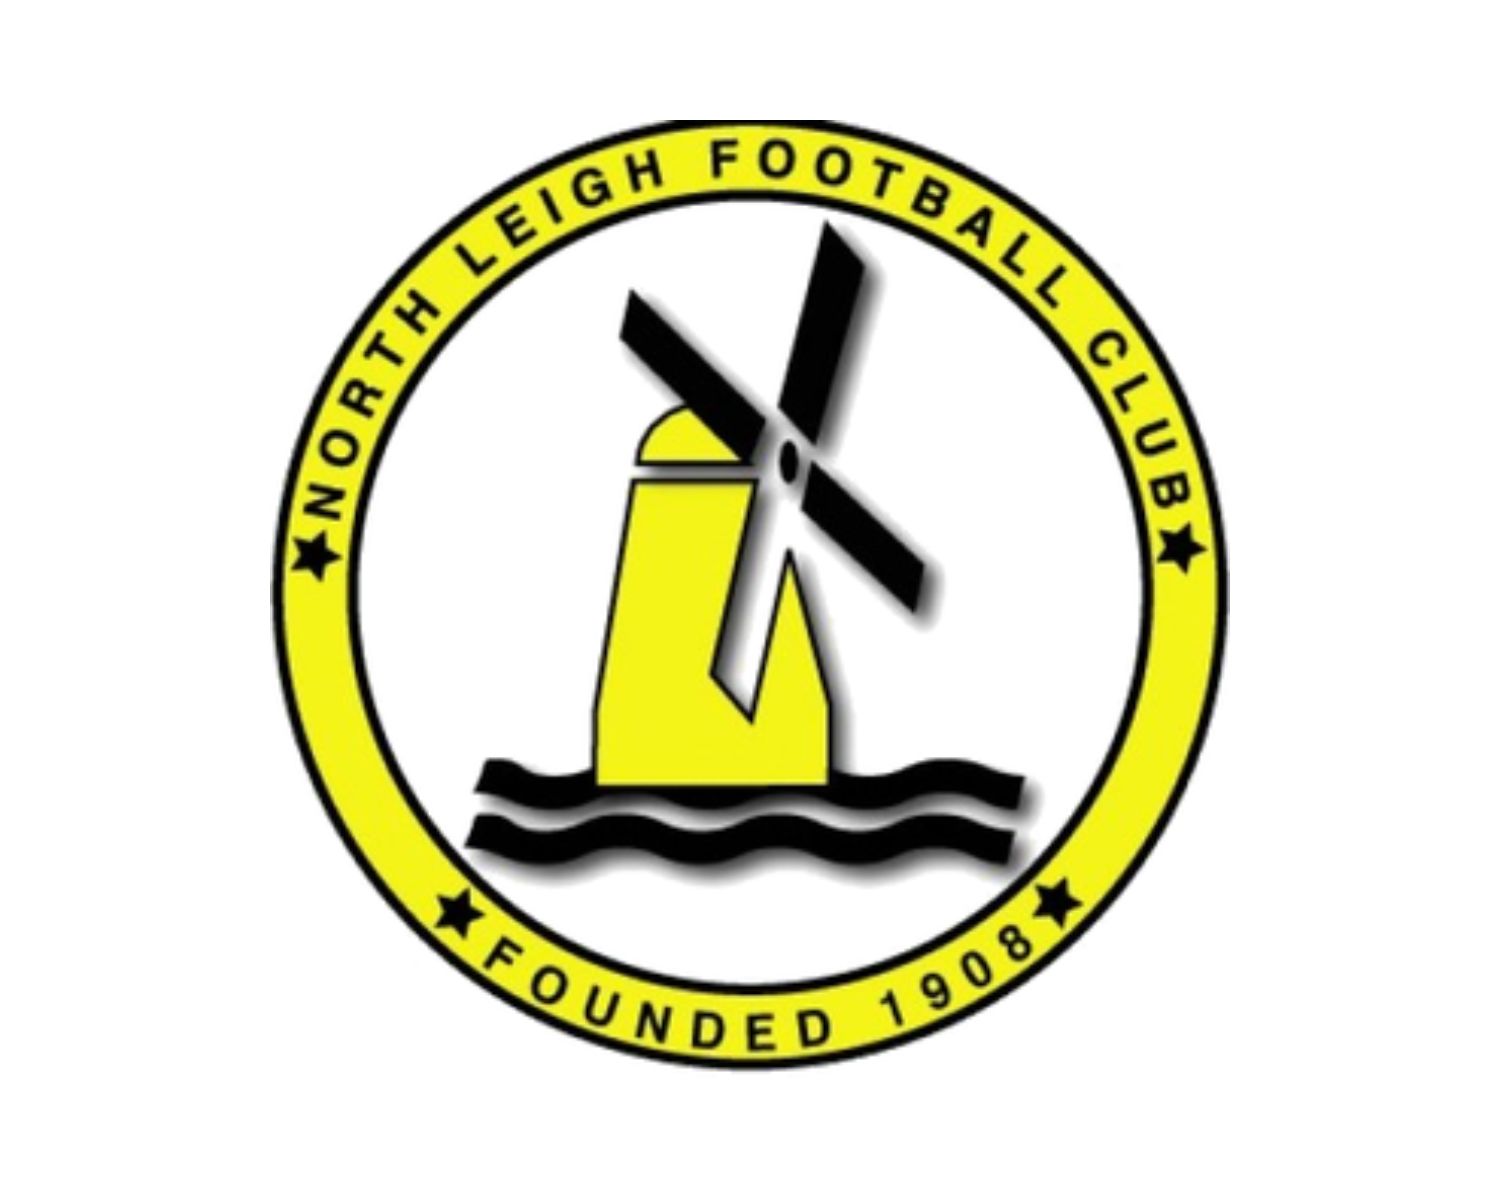 north-leigh-fc-22-football-club-facts